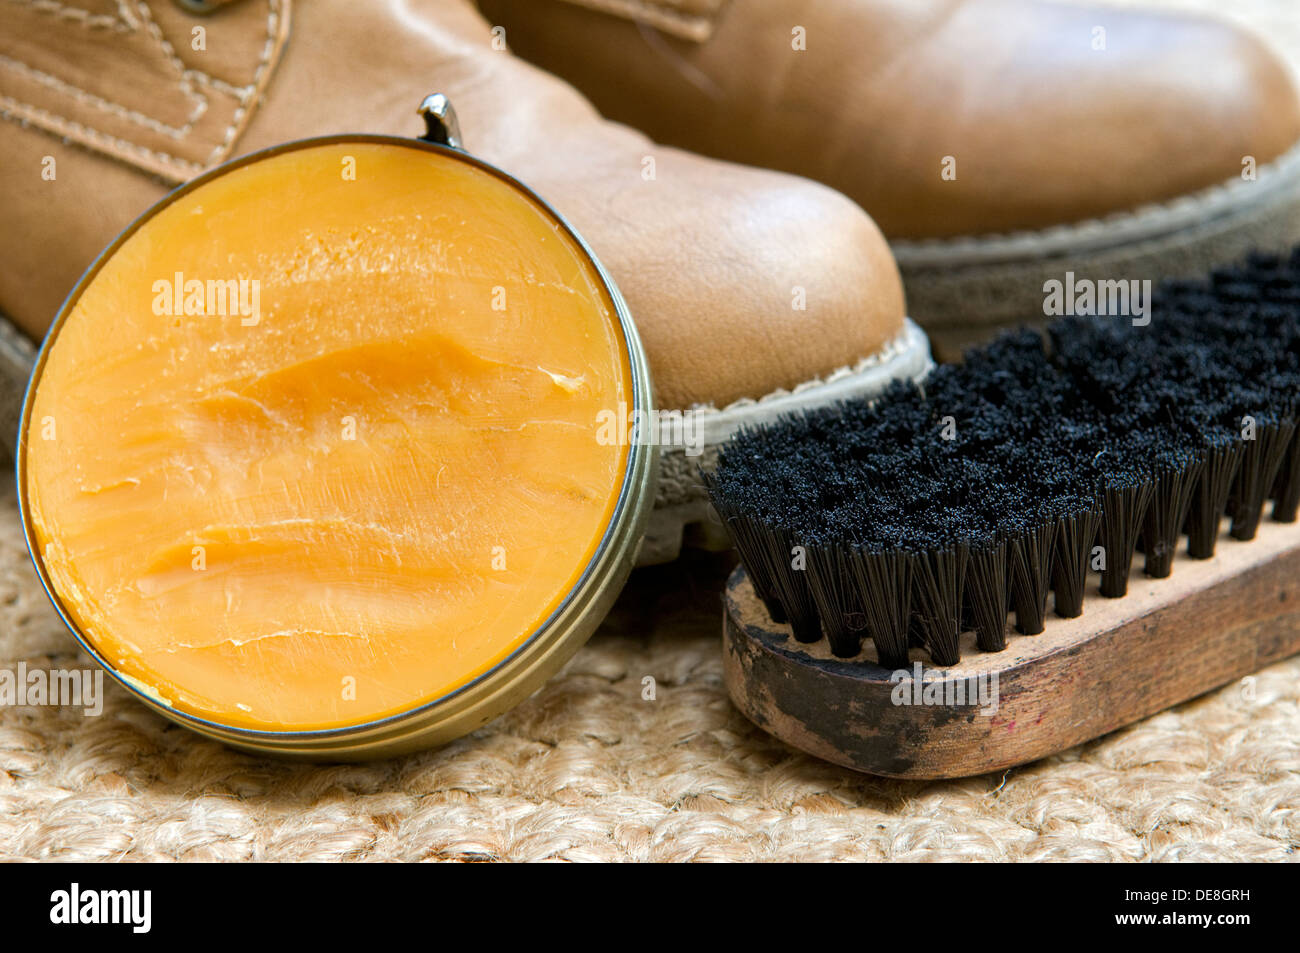 bronze shoe polish